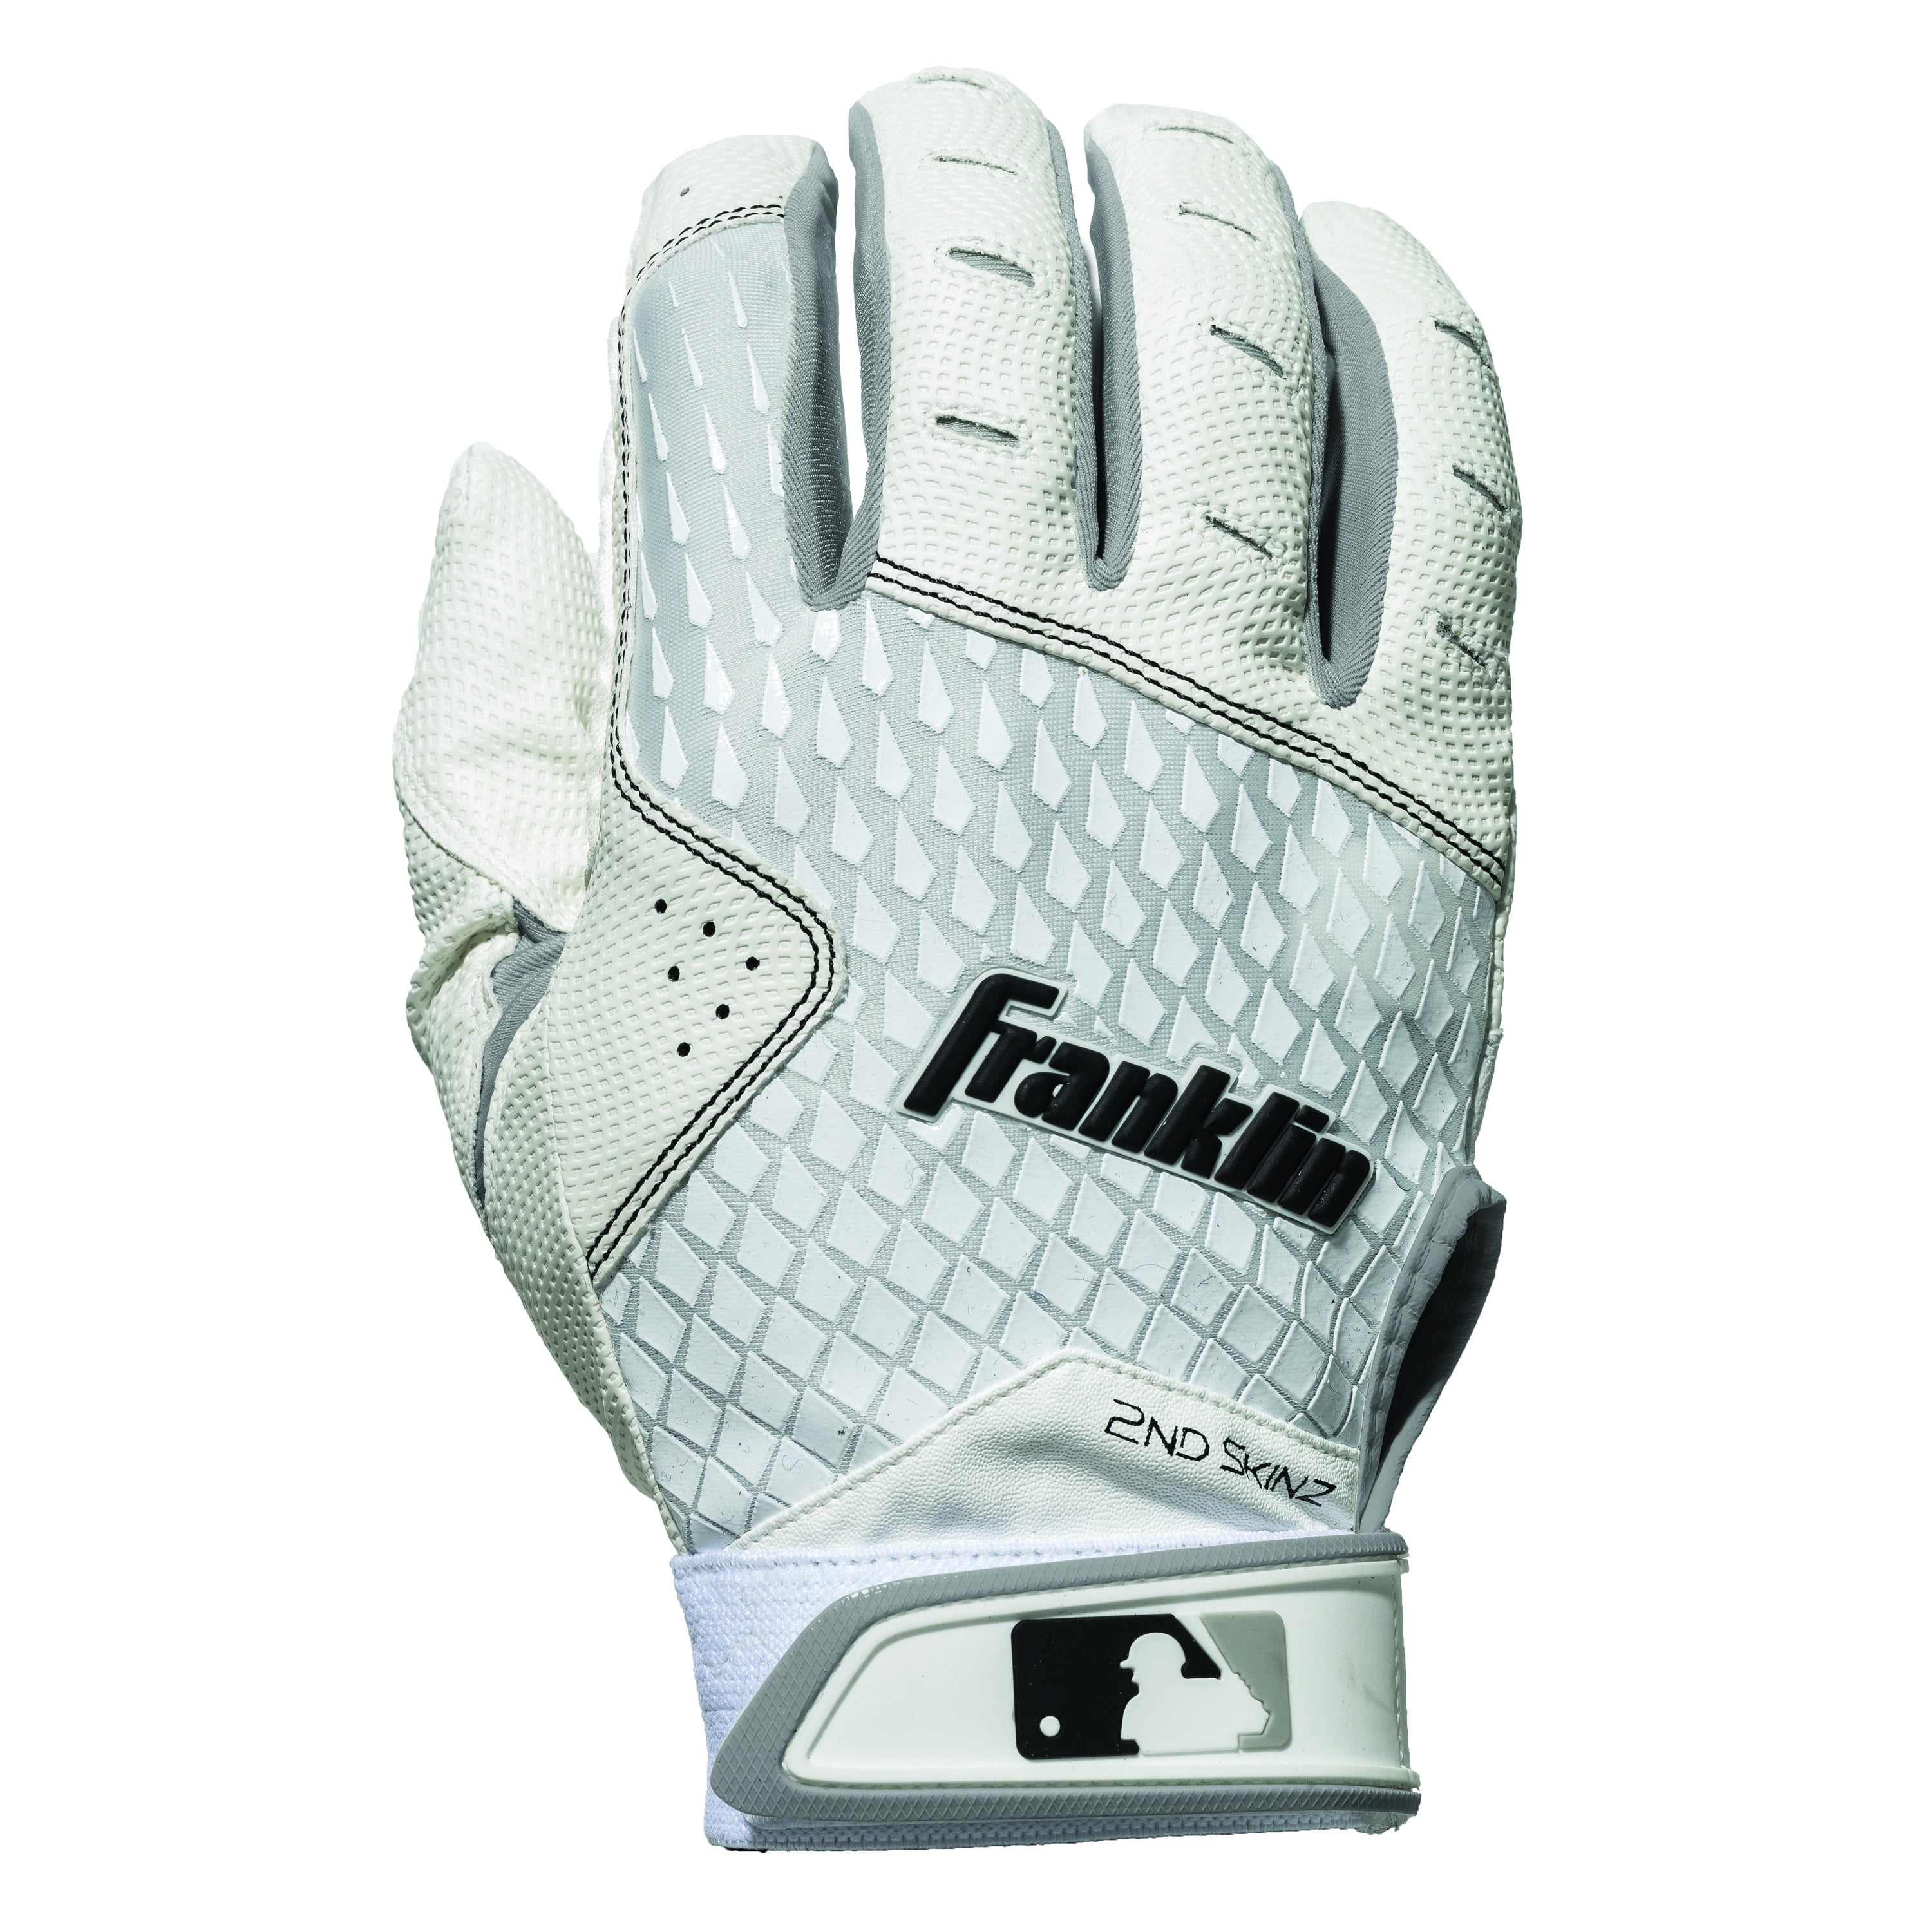 Style 21355F4 Size L Franklin Sports X-VENT PRO Adult Baseball Batting Gloves 